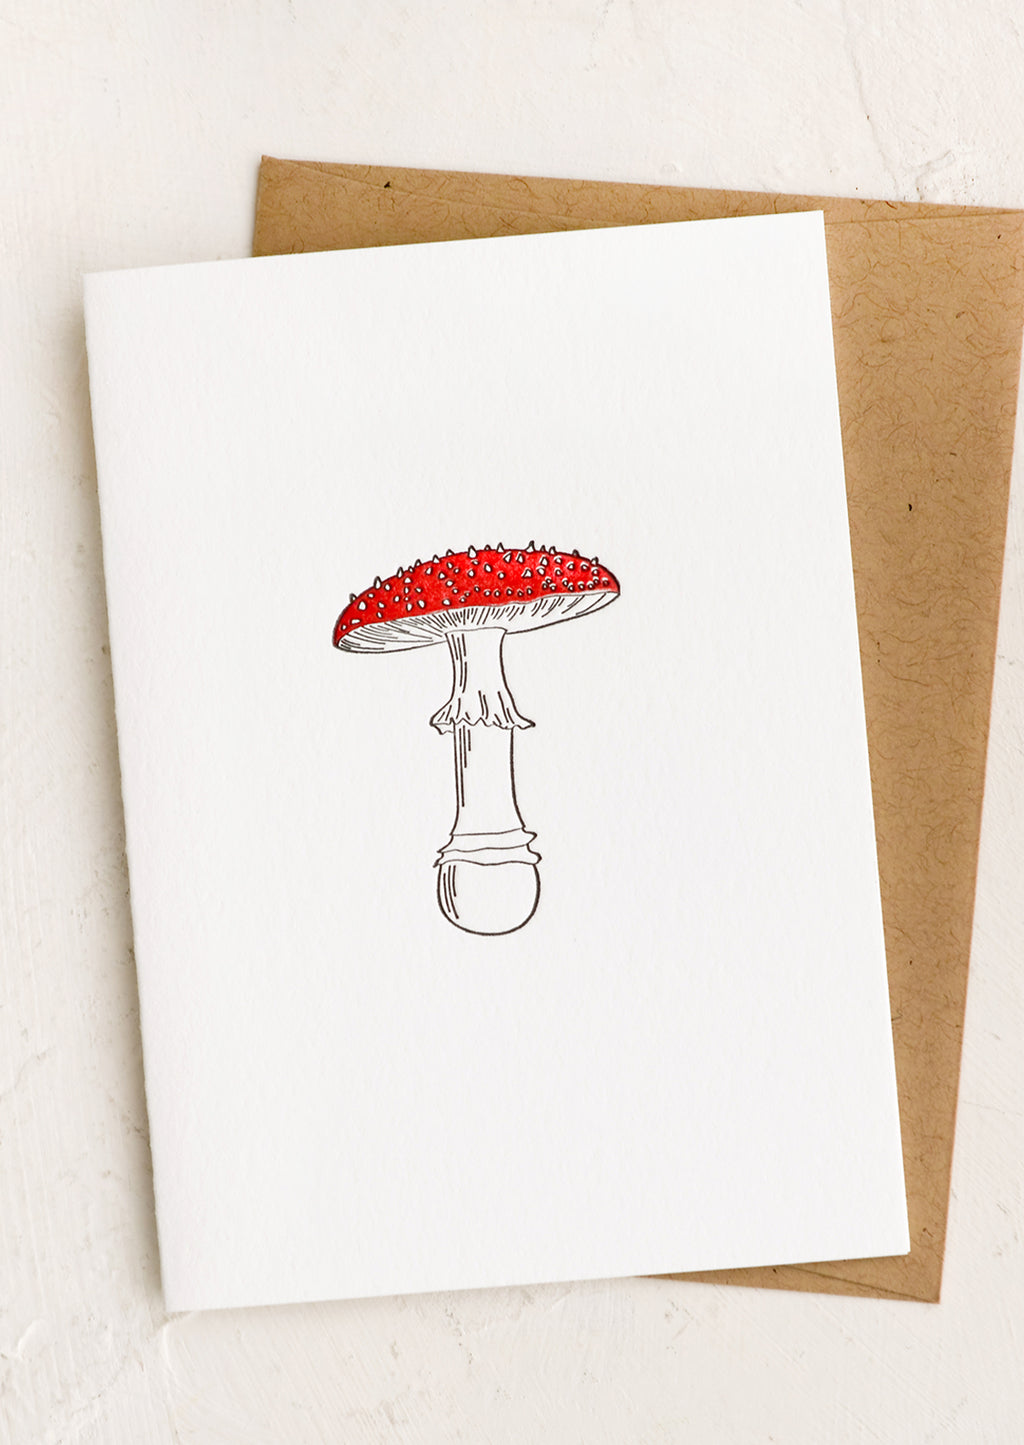 Mushroom: A blank white card with agaric mushroom illustration.